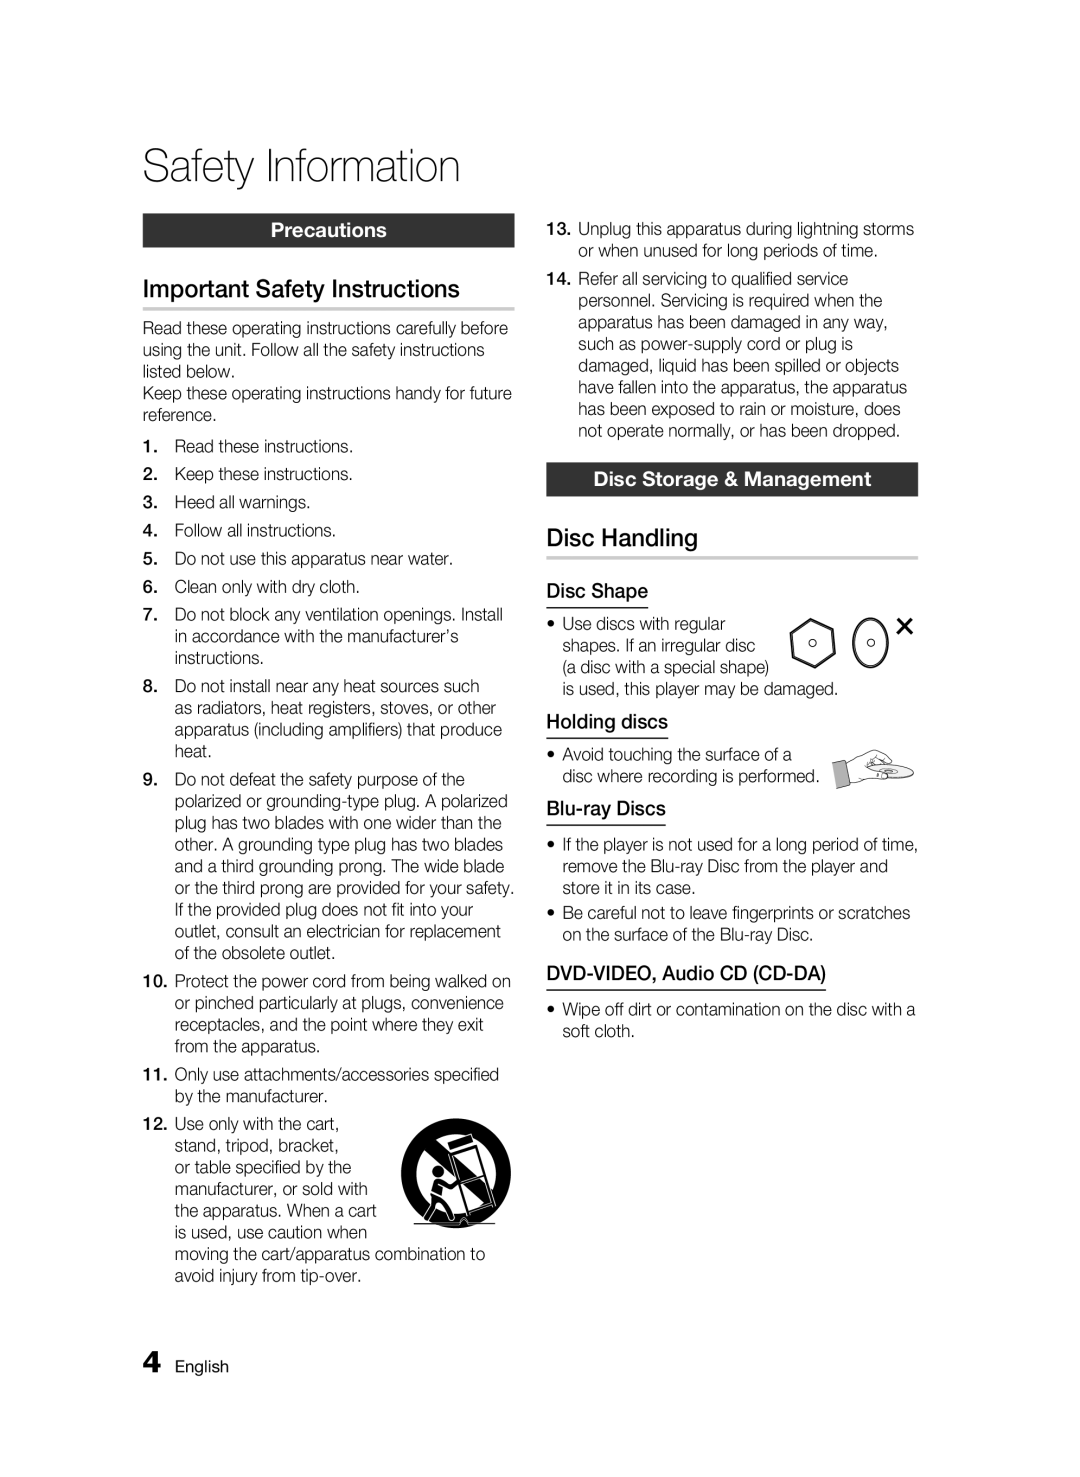 Samsung BD-C6300 Important Safety Instructions, Disc Handling, Precautions, Disc Storage & Management, Disc Shape 